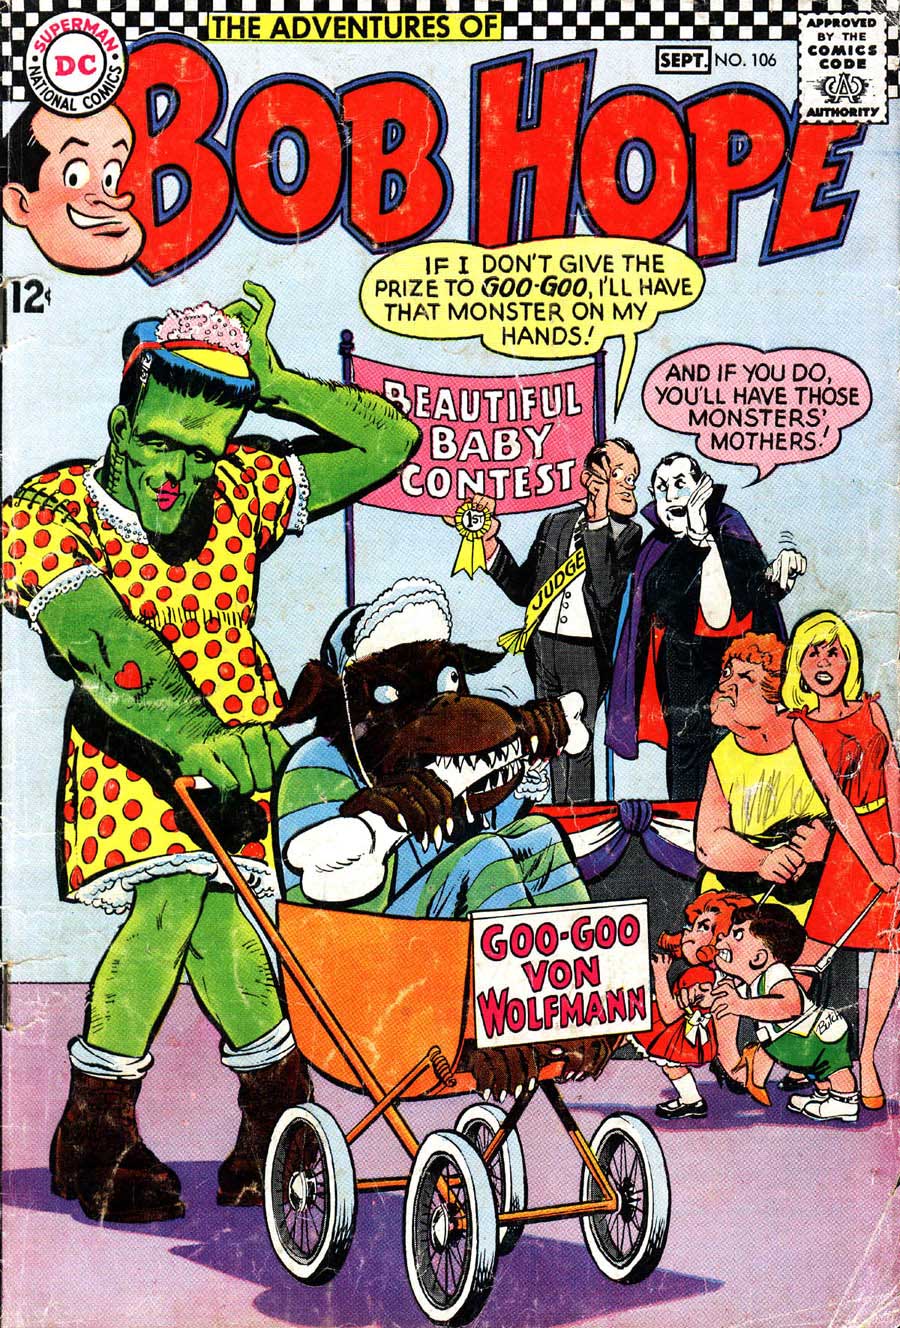 Adventures of Bob Hope v1 #106 - Neal Adams dc 1960s comic book cover art